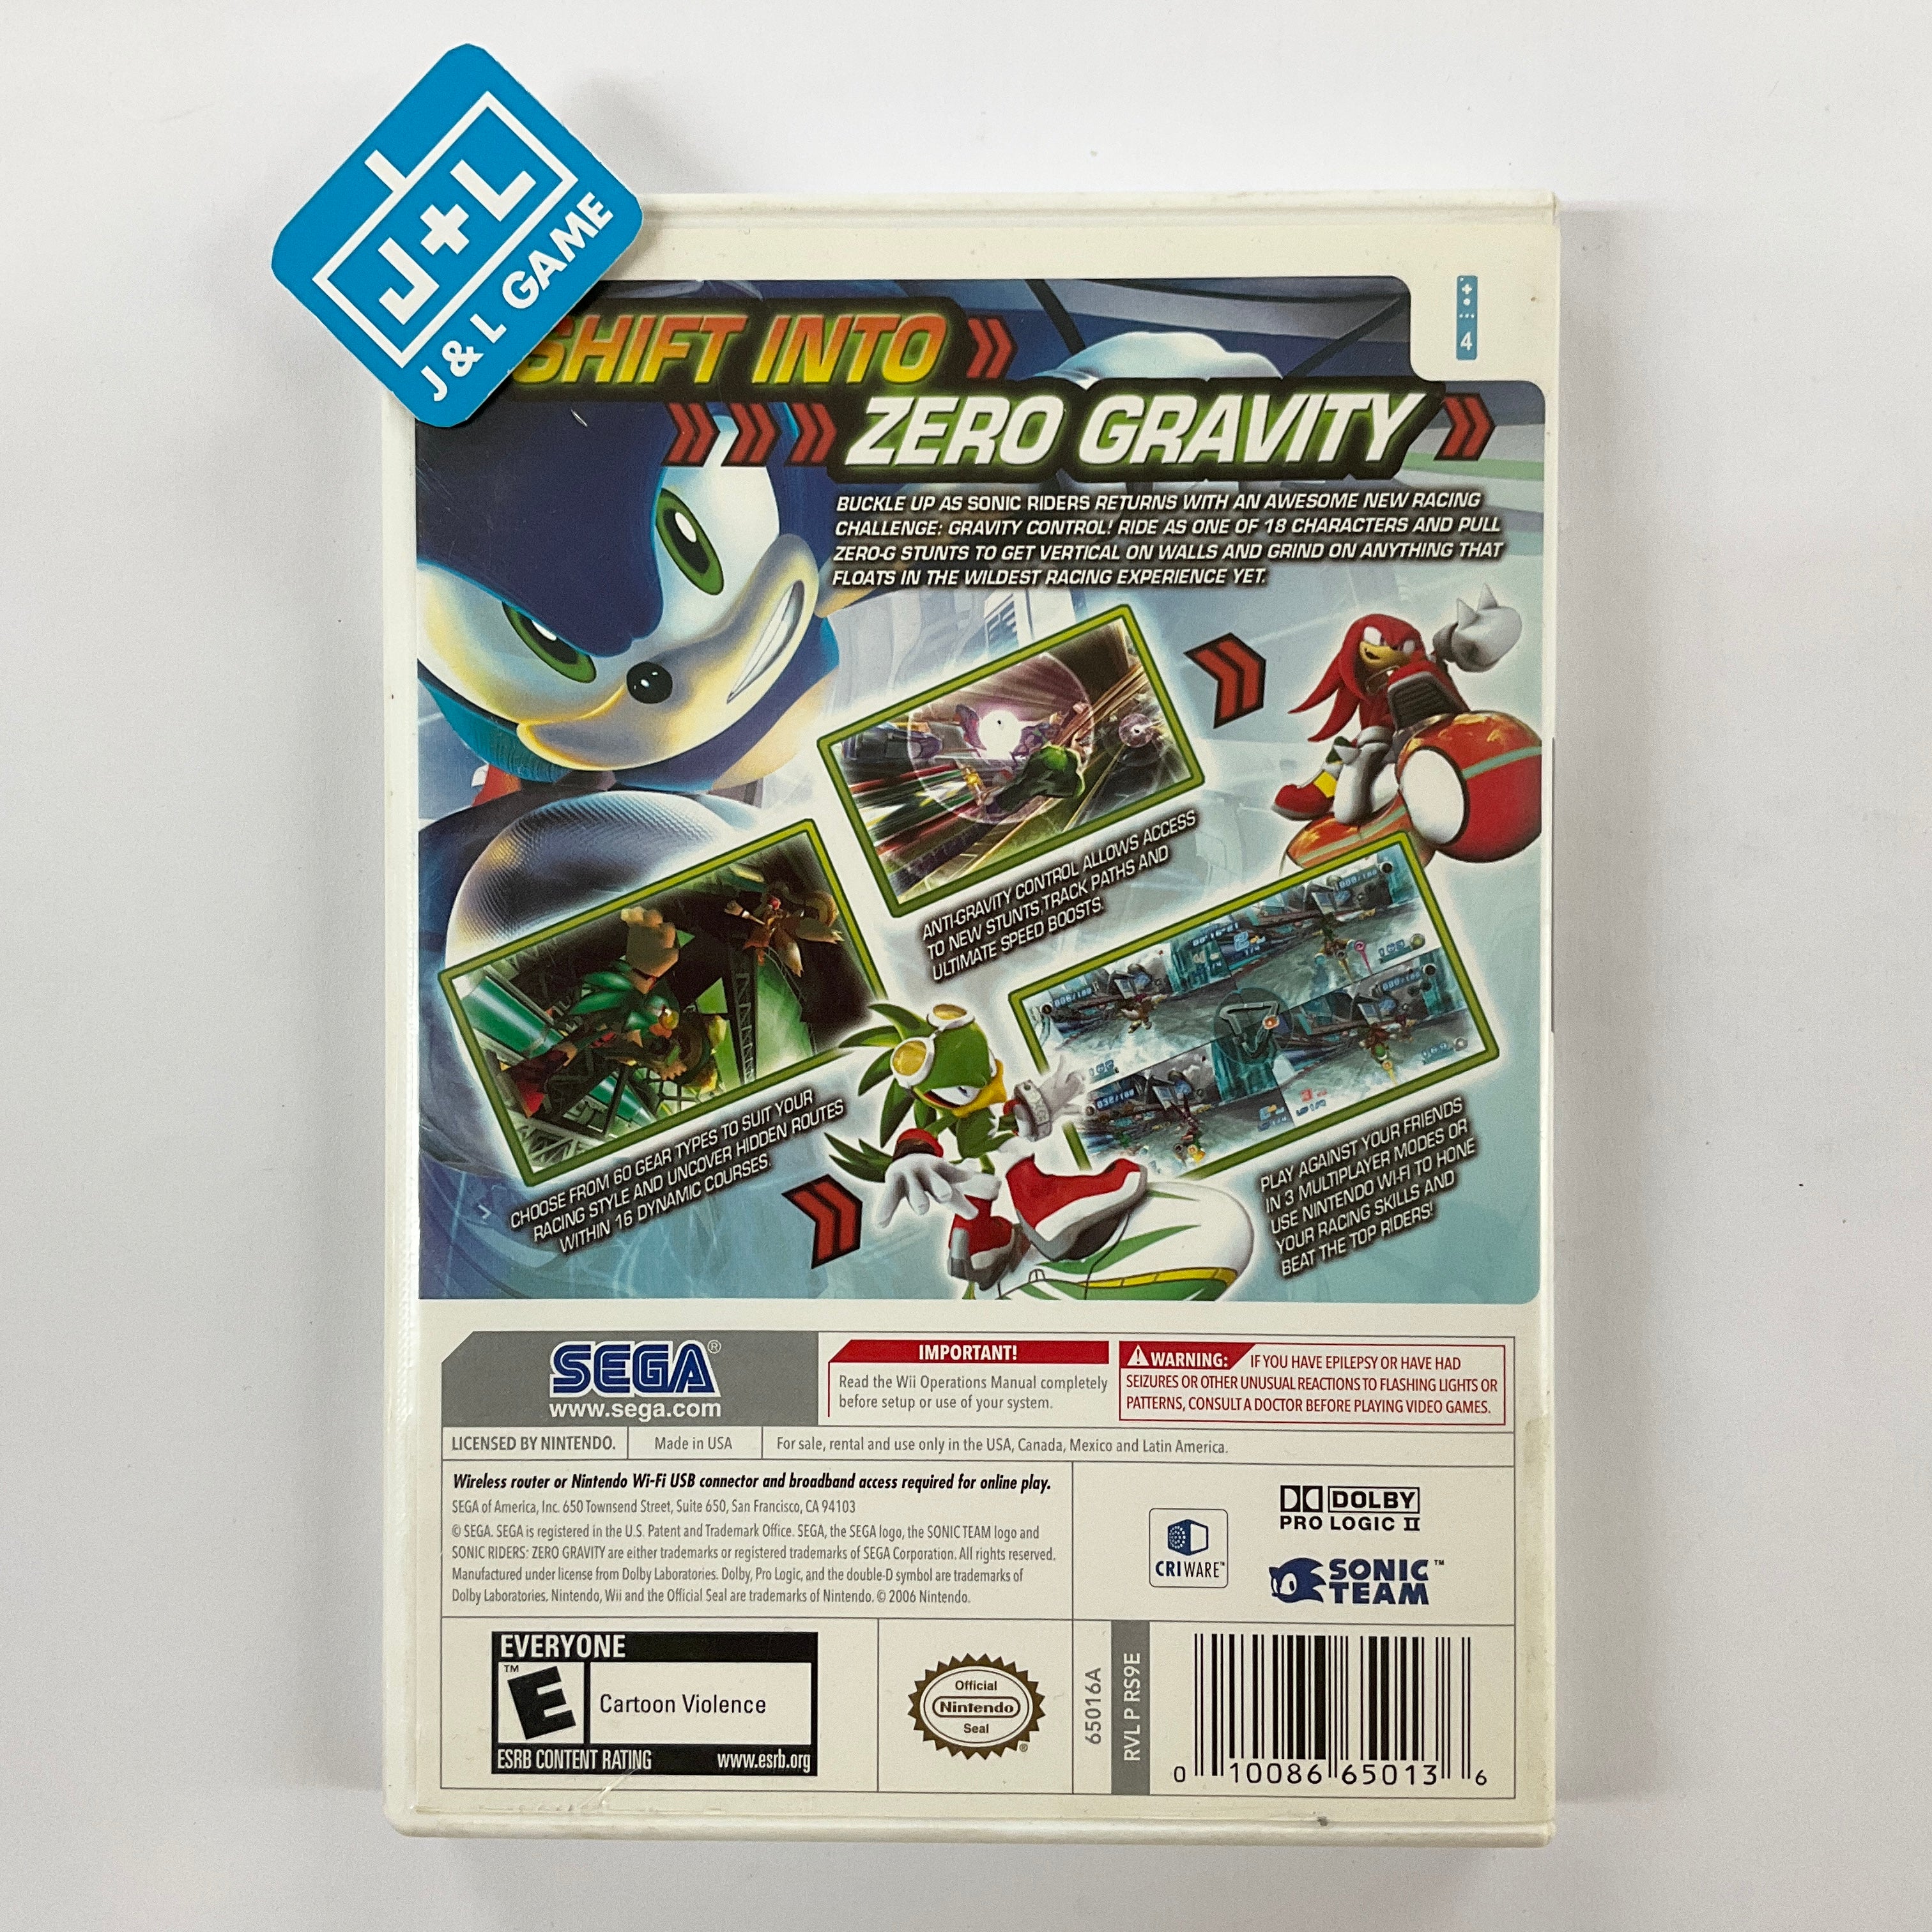 Sonic Riders: Zero Gravity - Nintendo Wii [Pre-Owned] Video Games Sega   